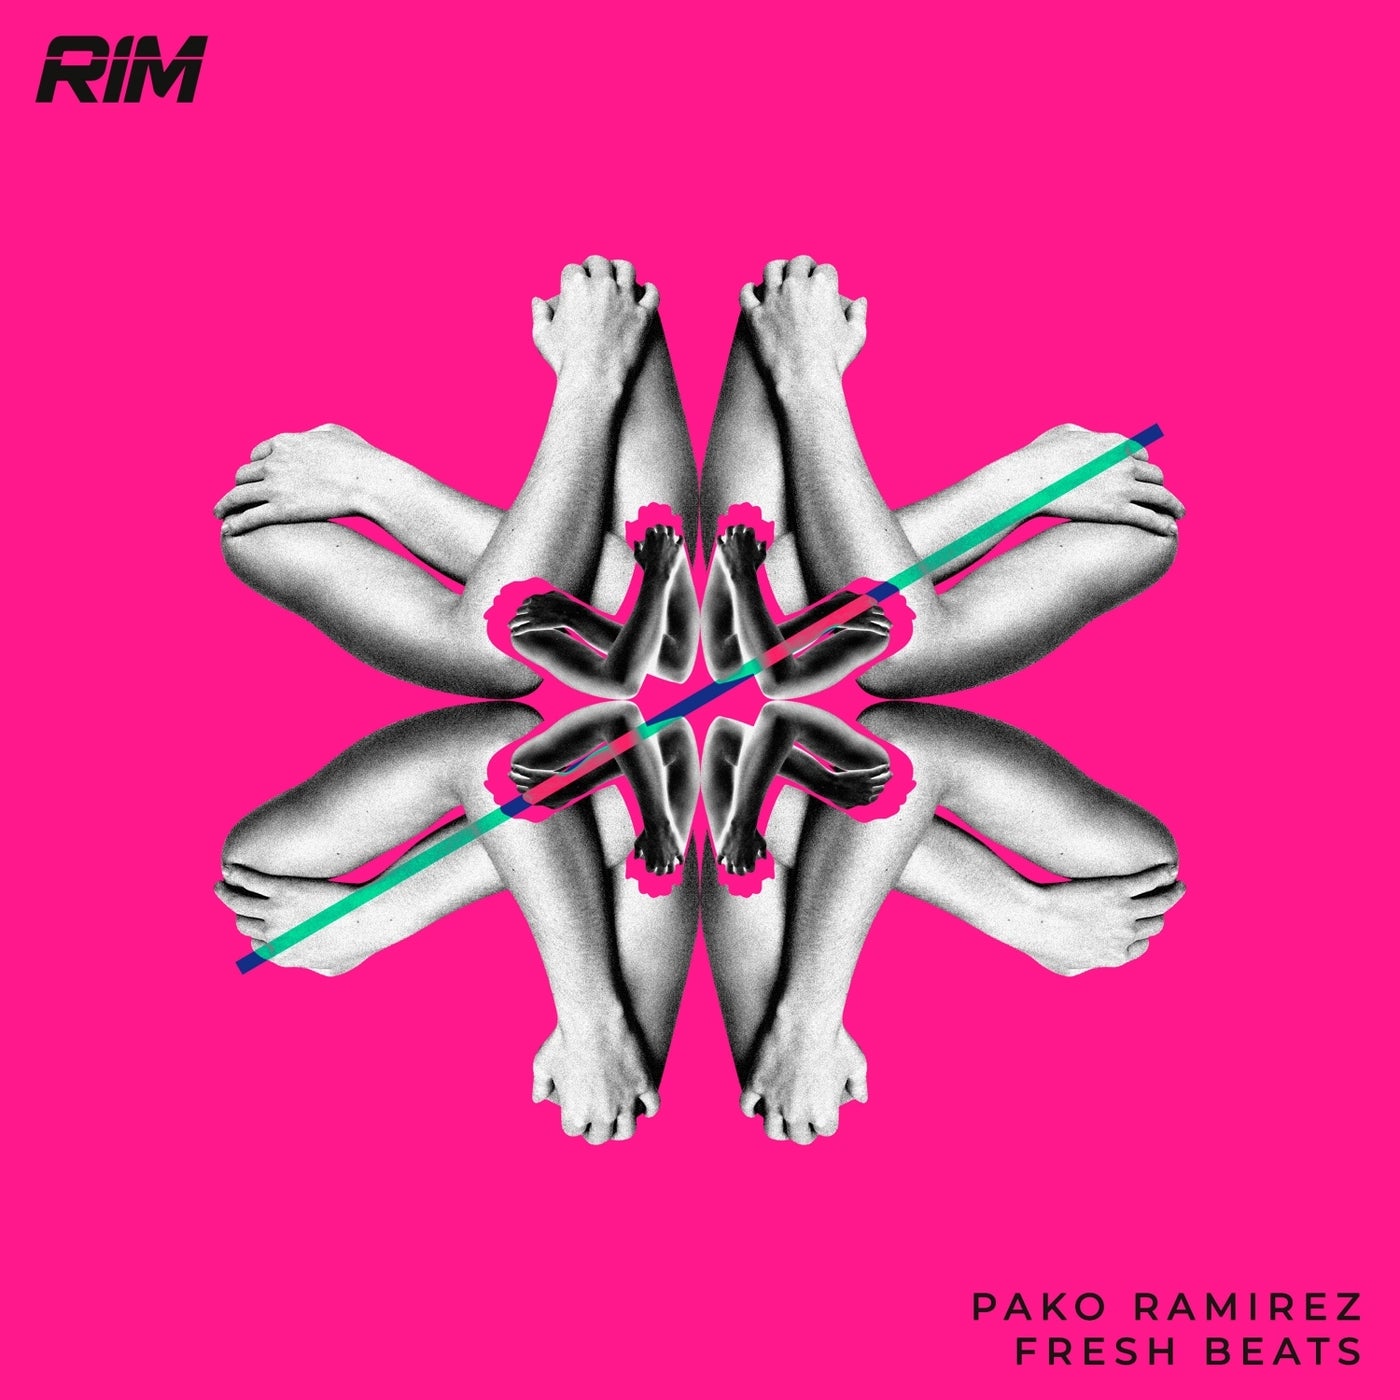 Pako Ramirez – If You Love Me [LOW169]